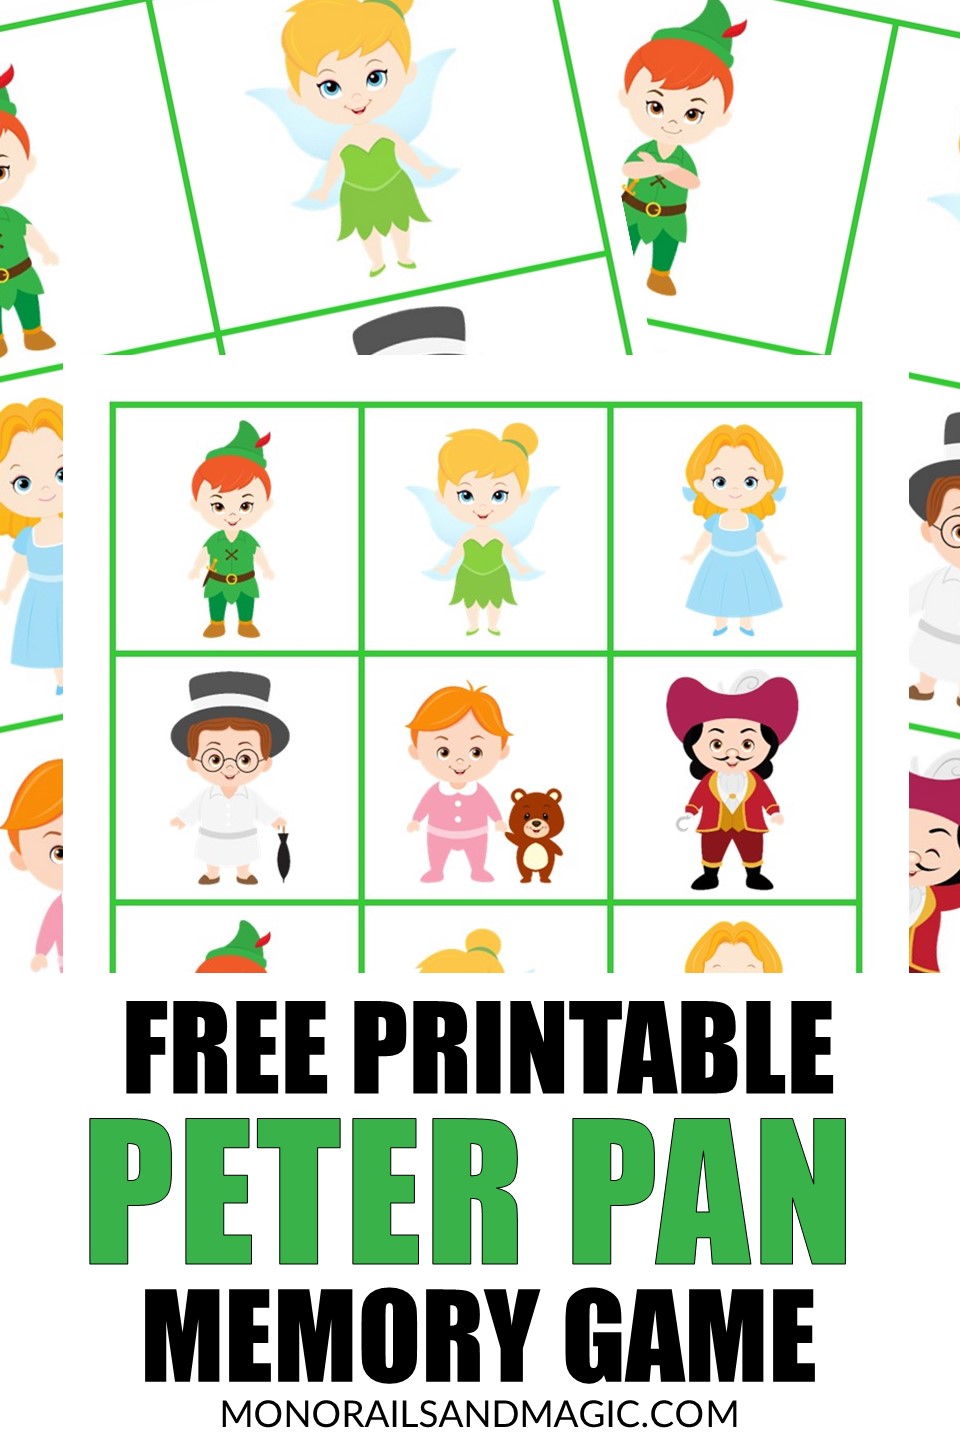 Free printable Peter Pan memory game for kids.